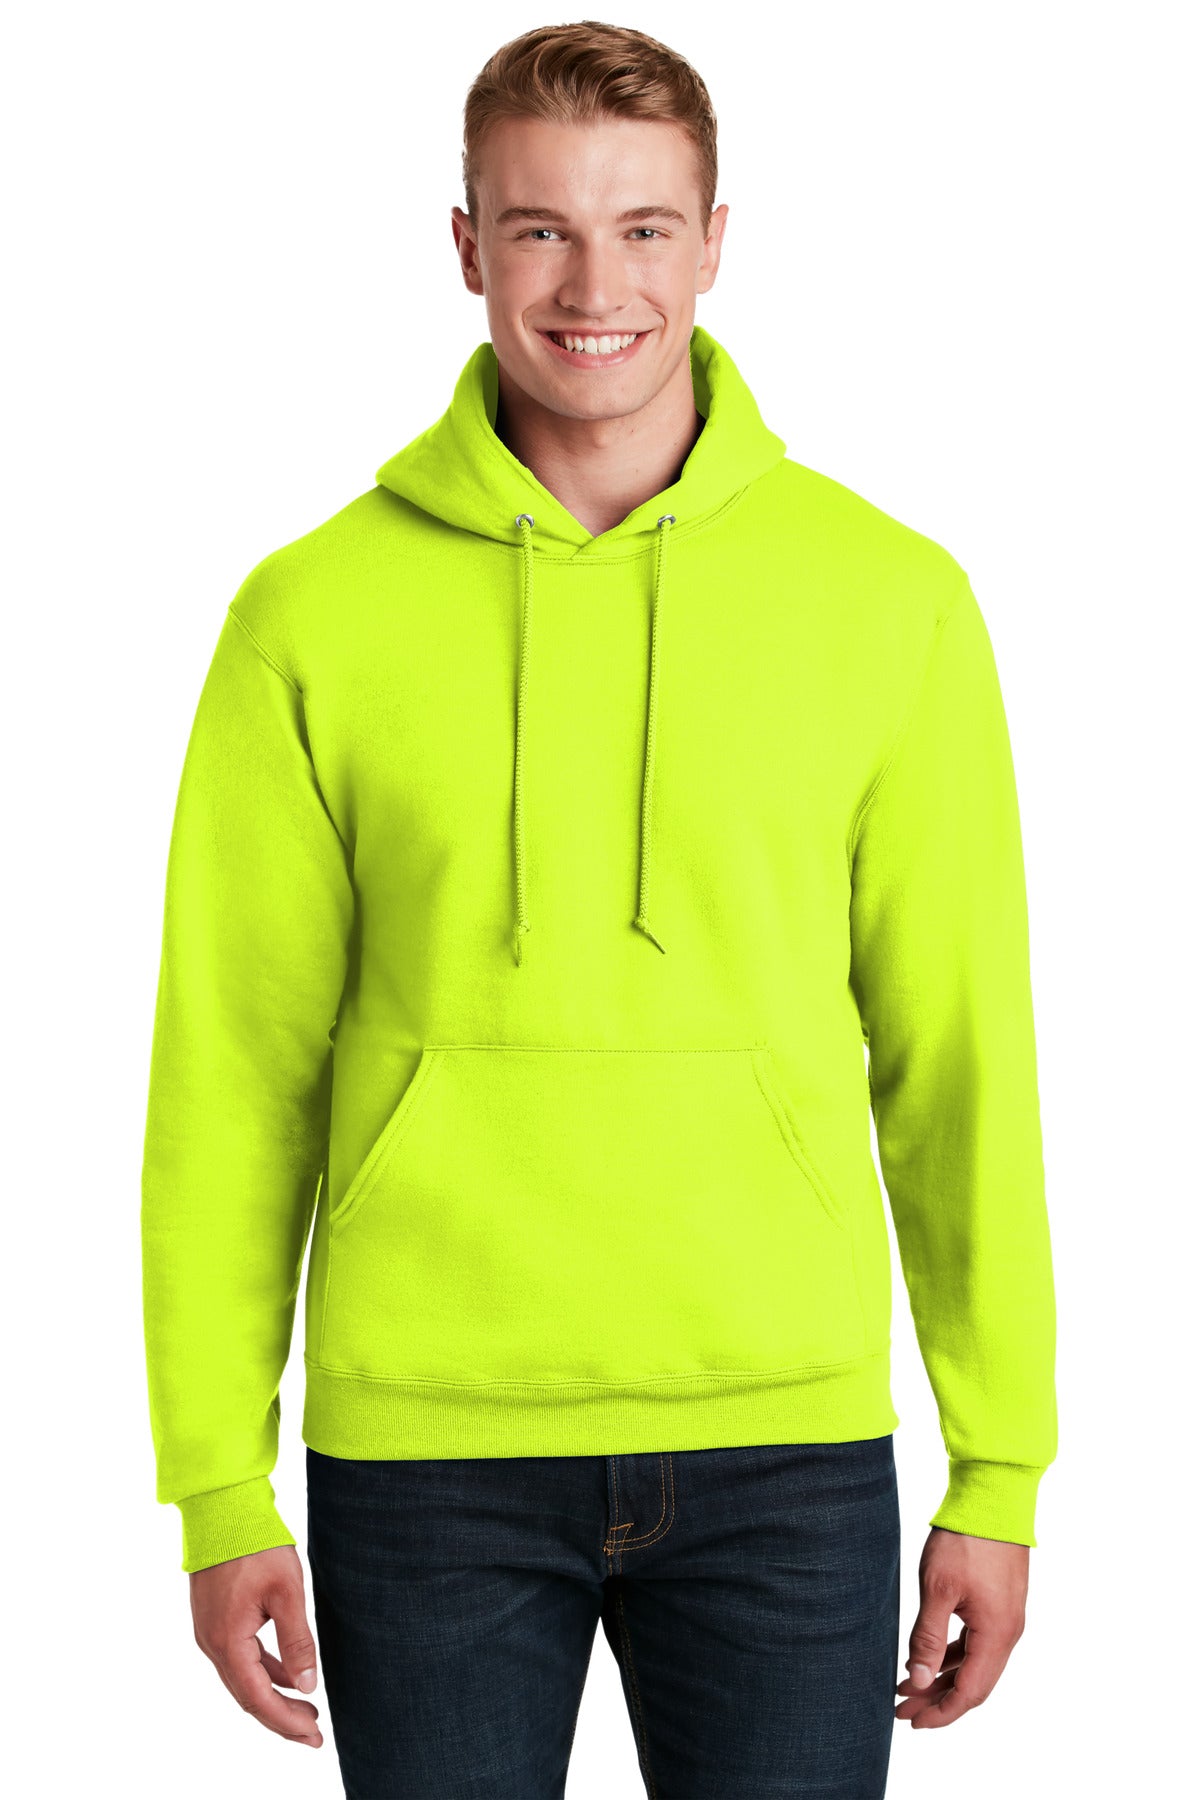 JERZEES® SUPER SWEATS® NuBlend® - Pullover Hooded Sweatshirt.  4997M